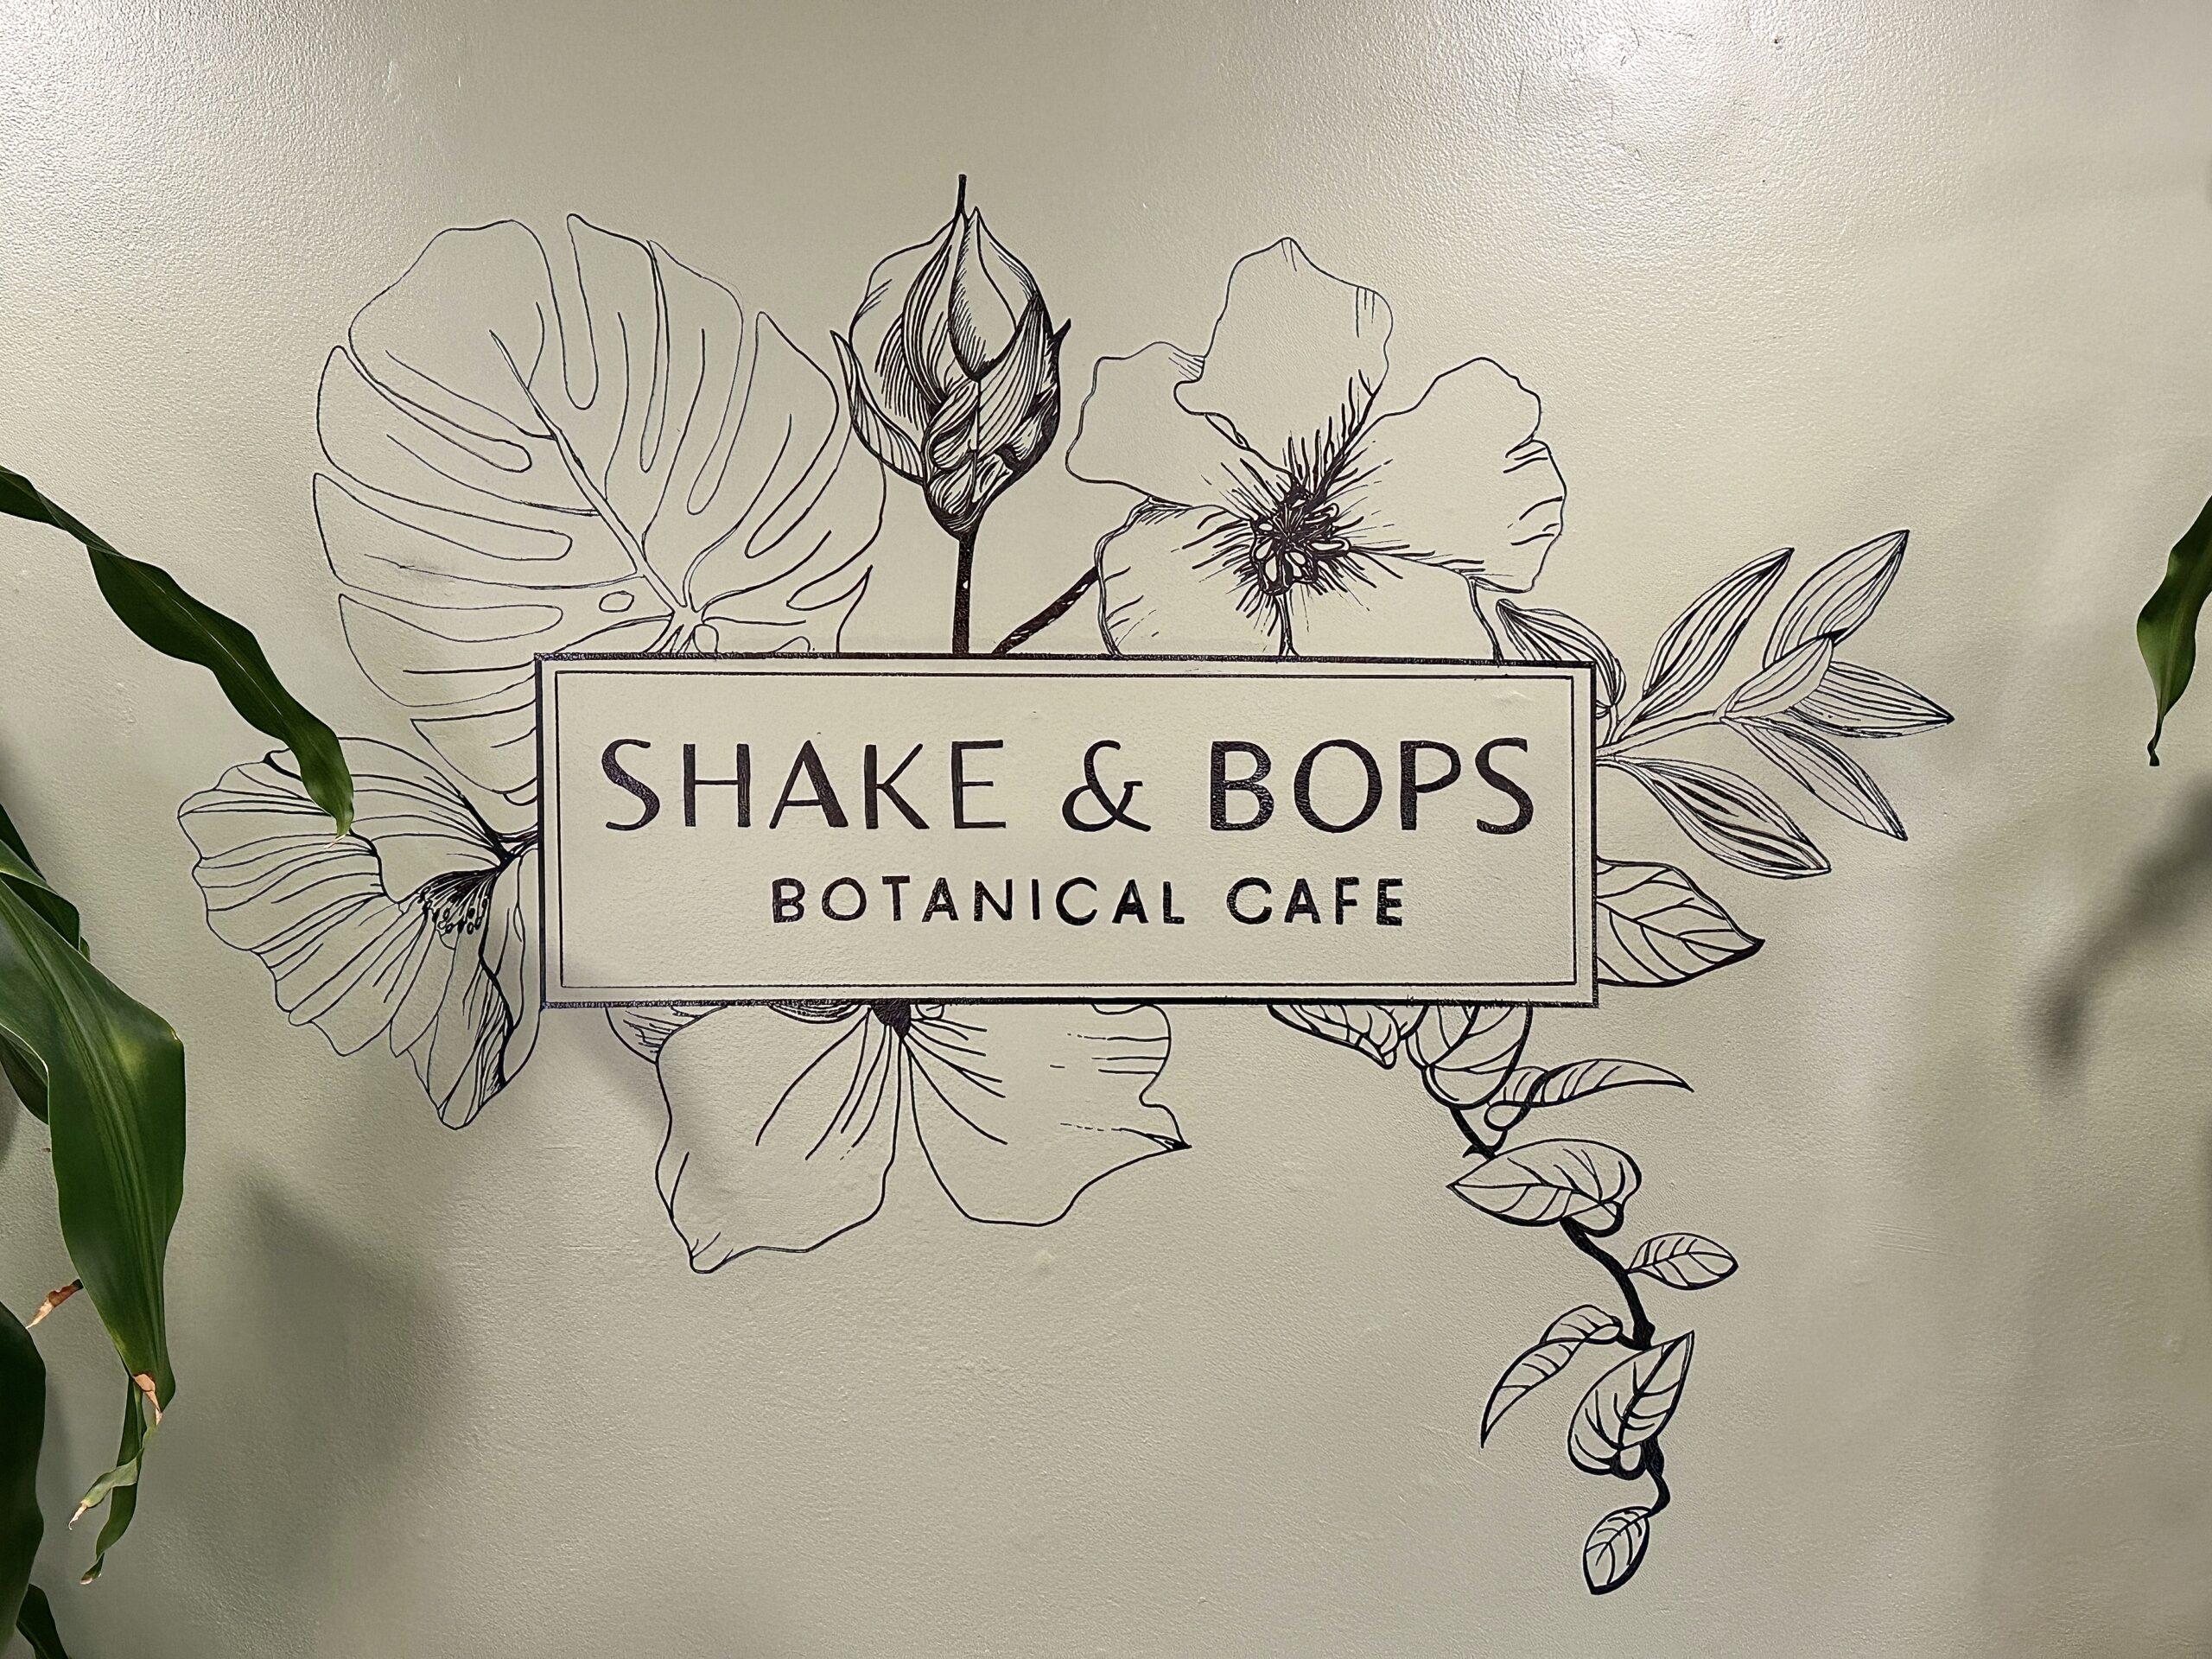 First look inside Shake & Bops Botanical Cafe in Leesburg - The Burn